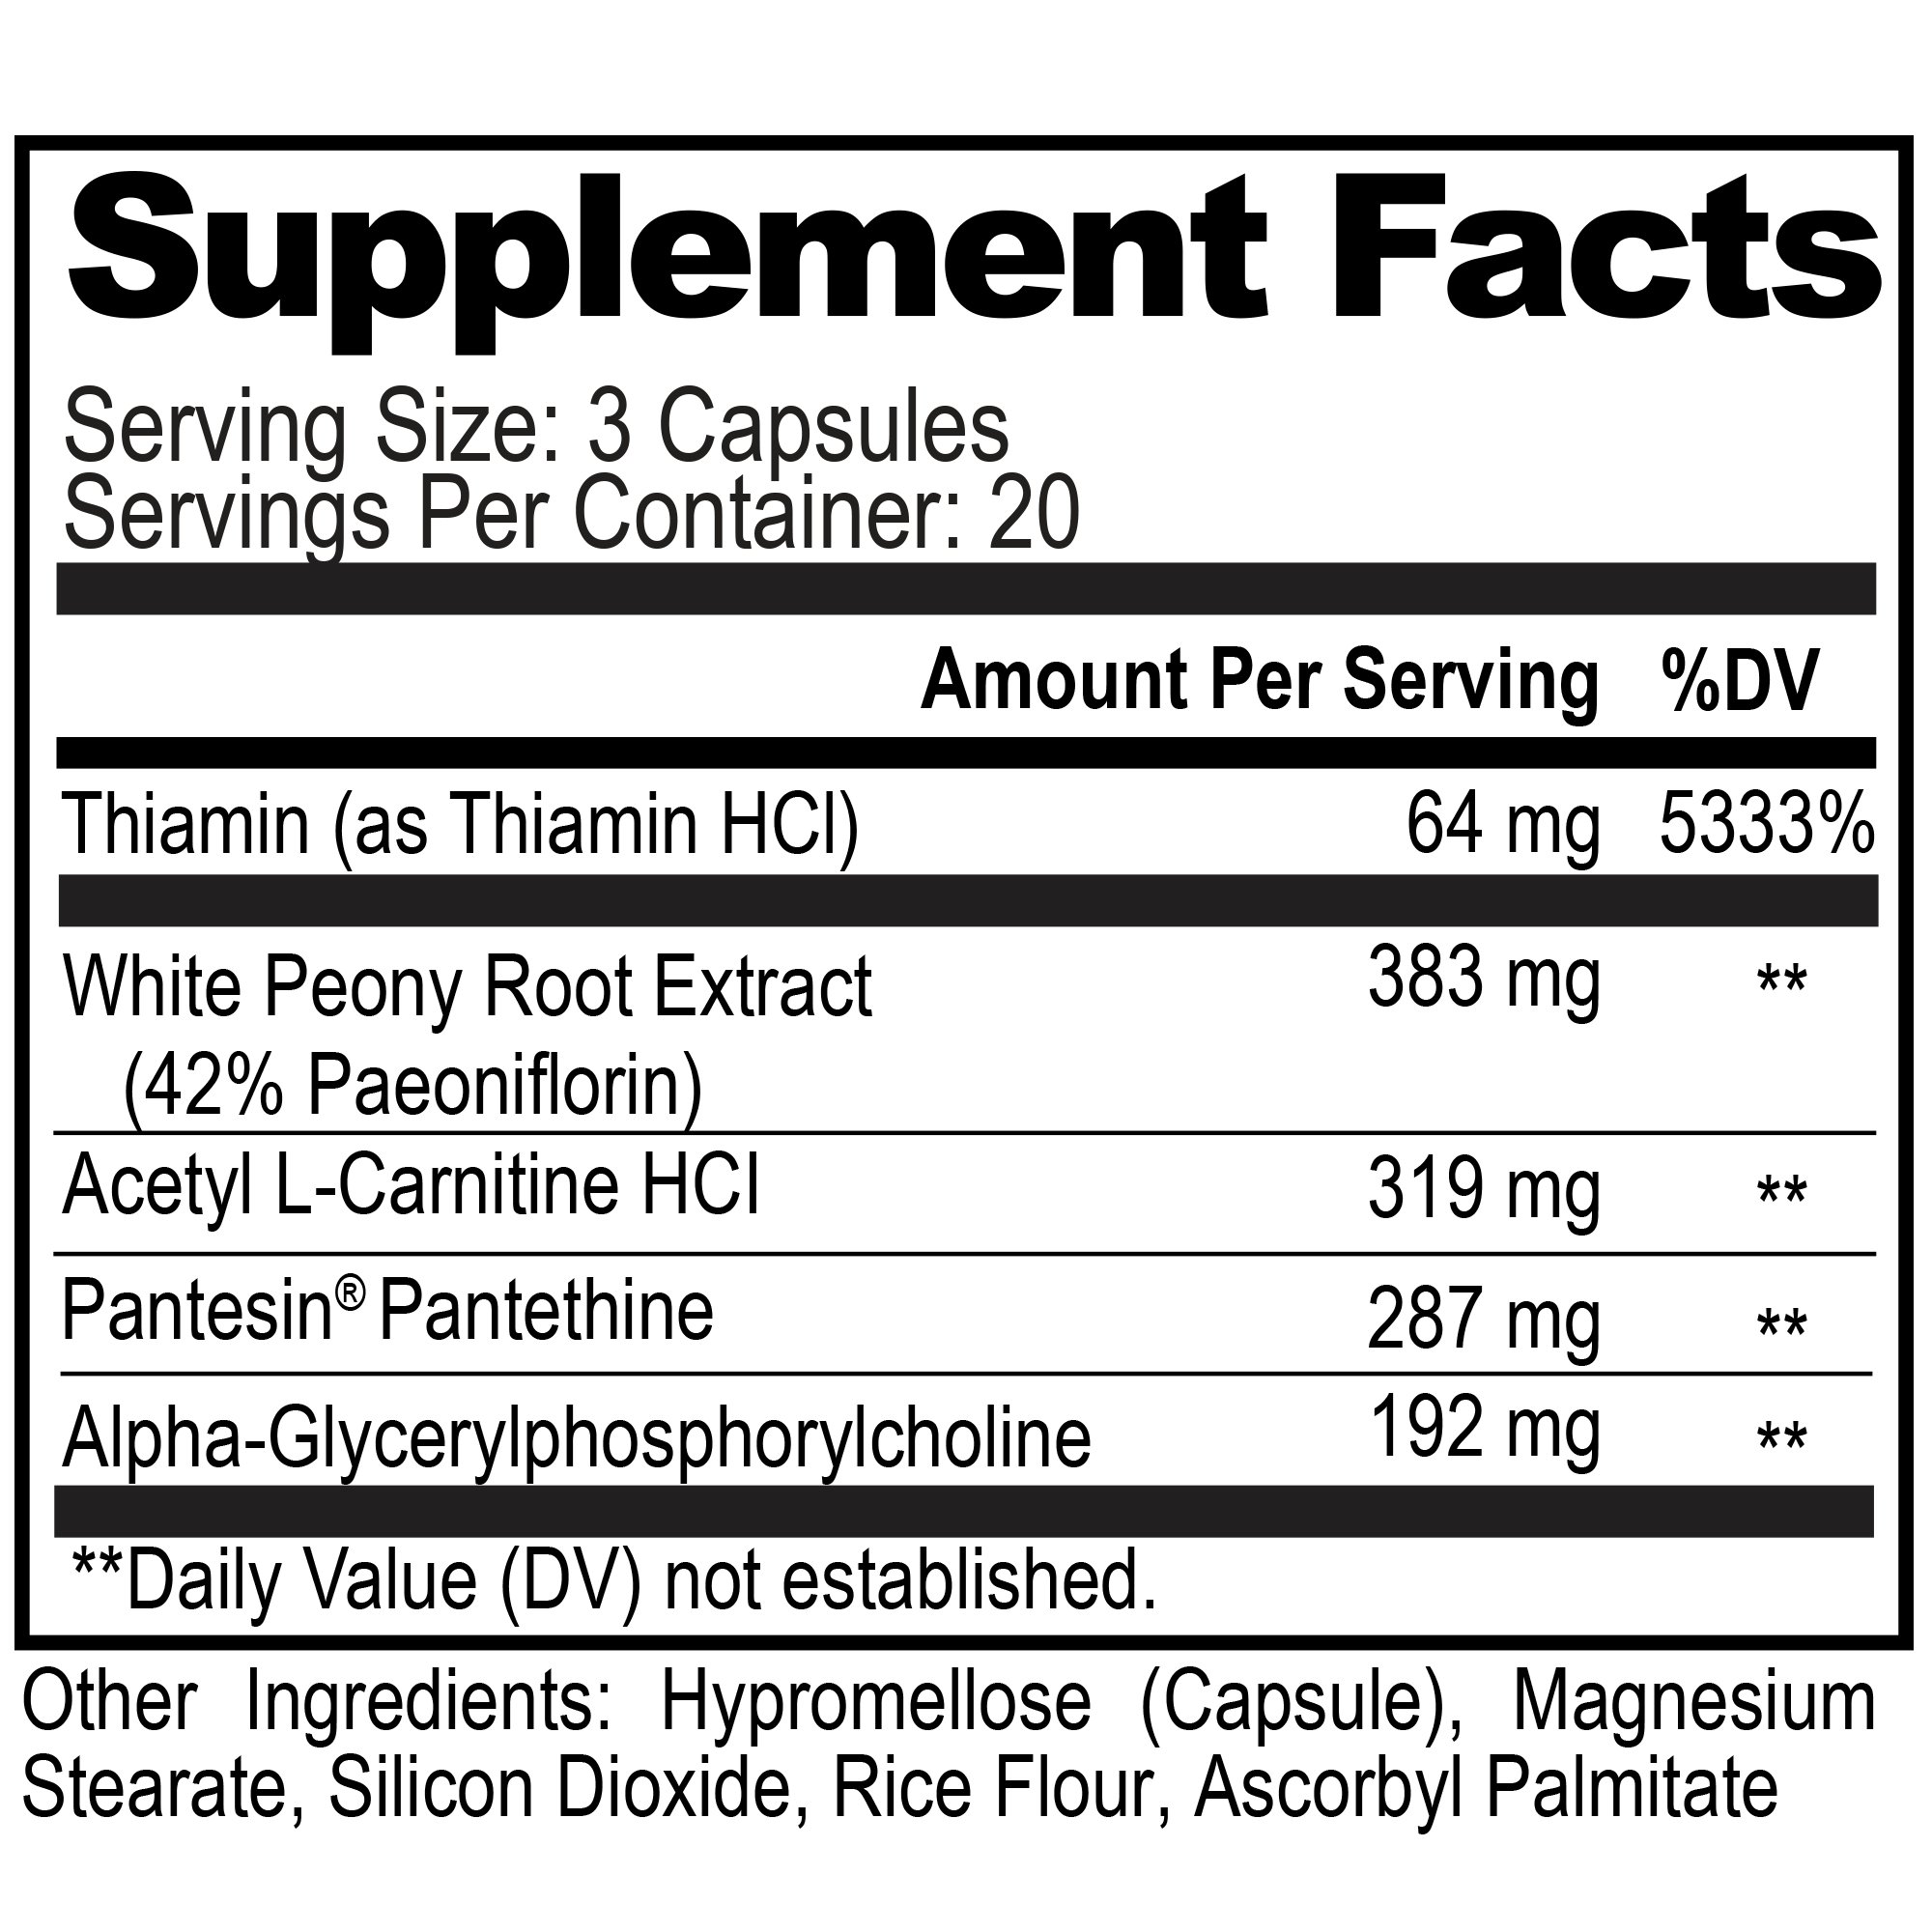 Acetylcholine Brain Food™